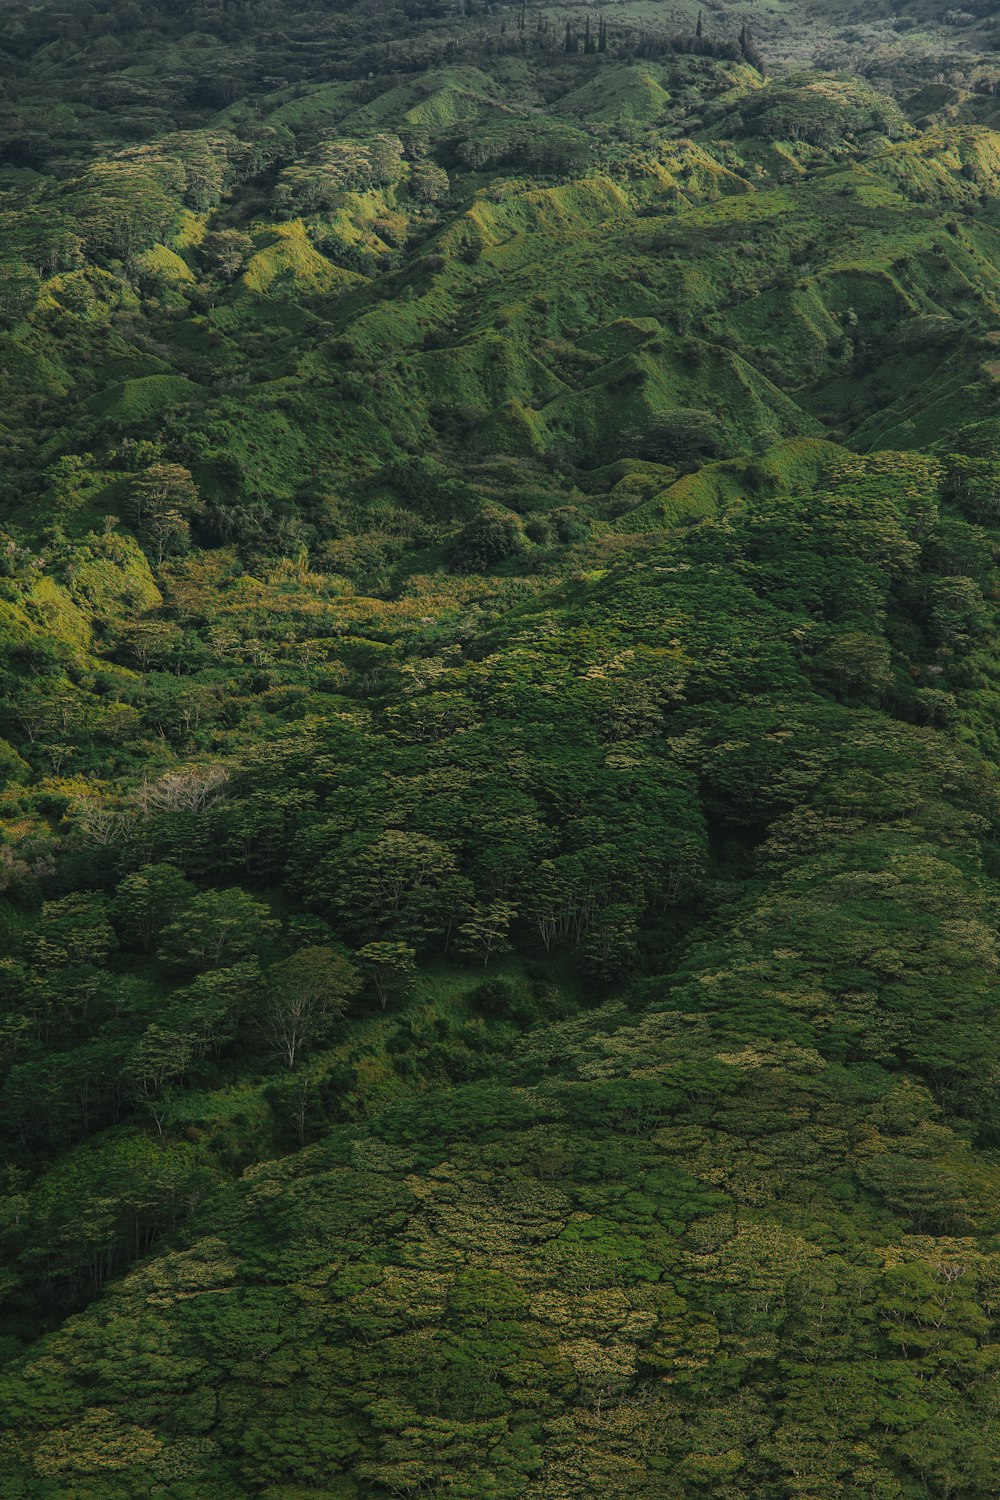 a plane flying over a lush green hillside